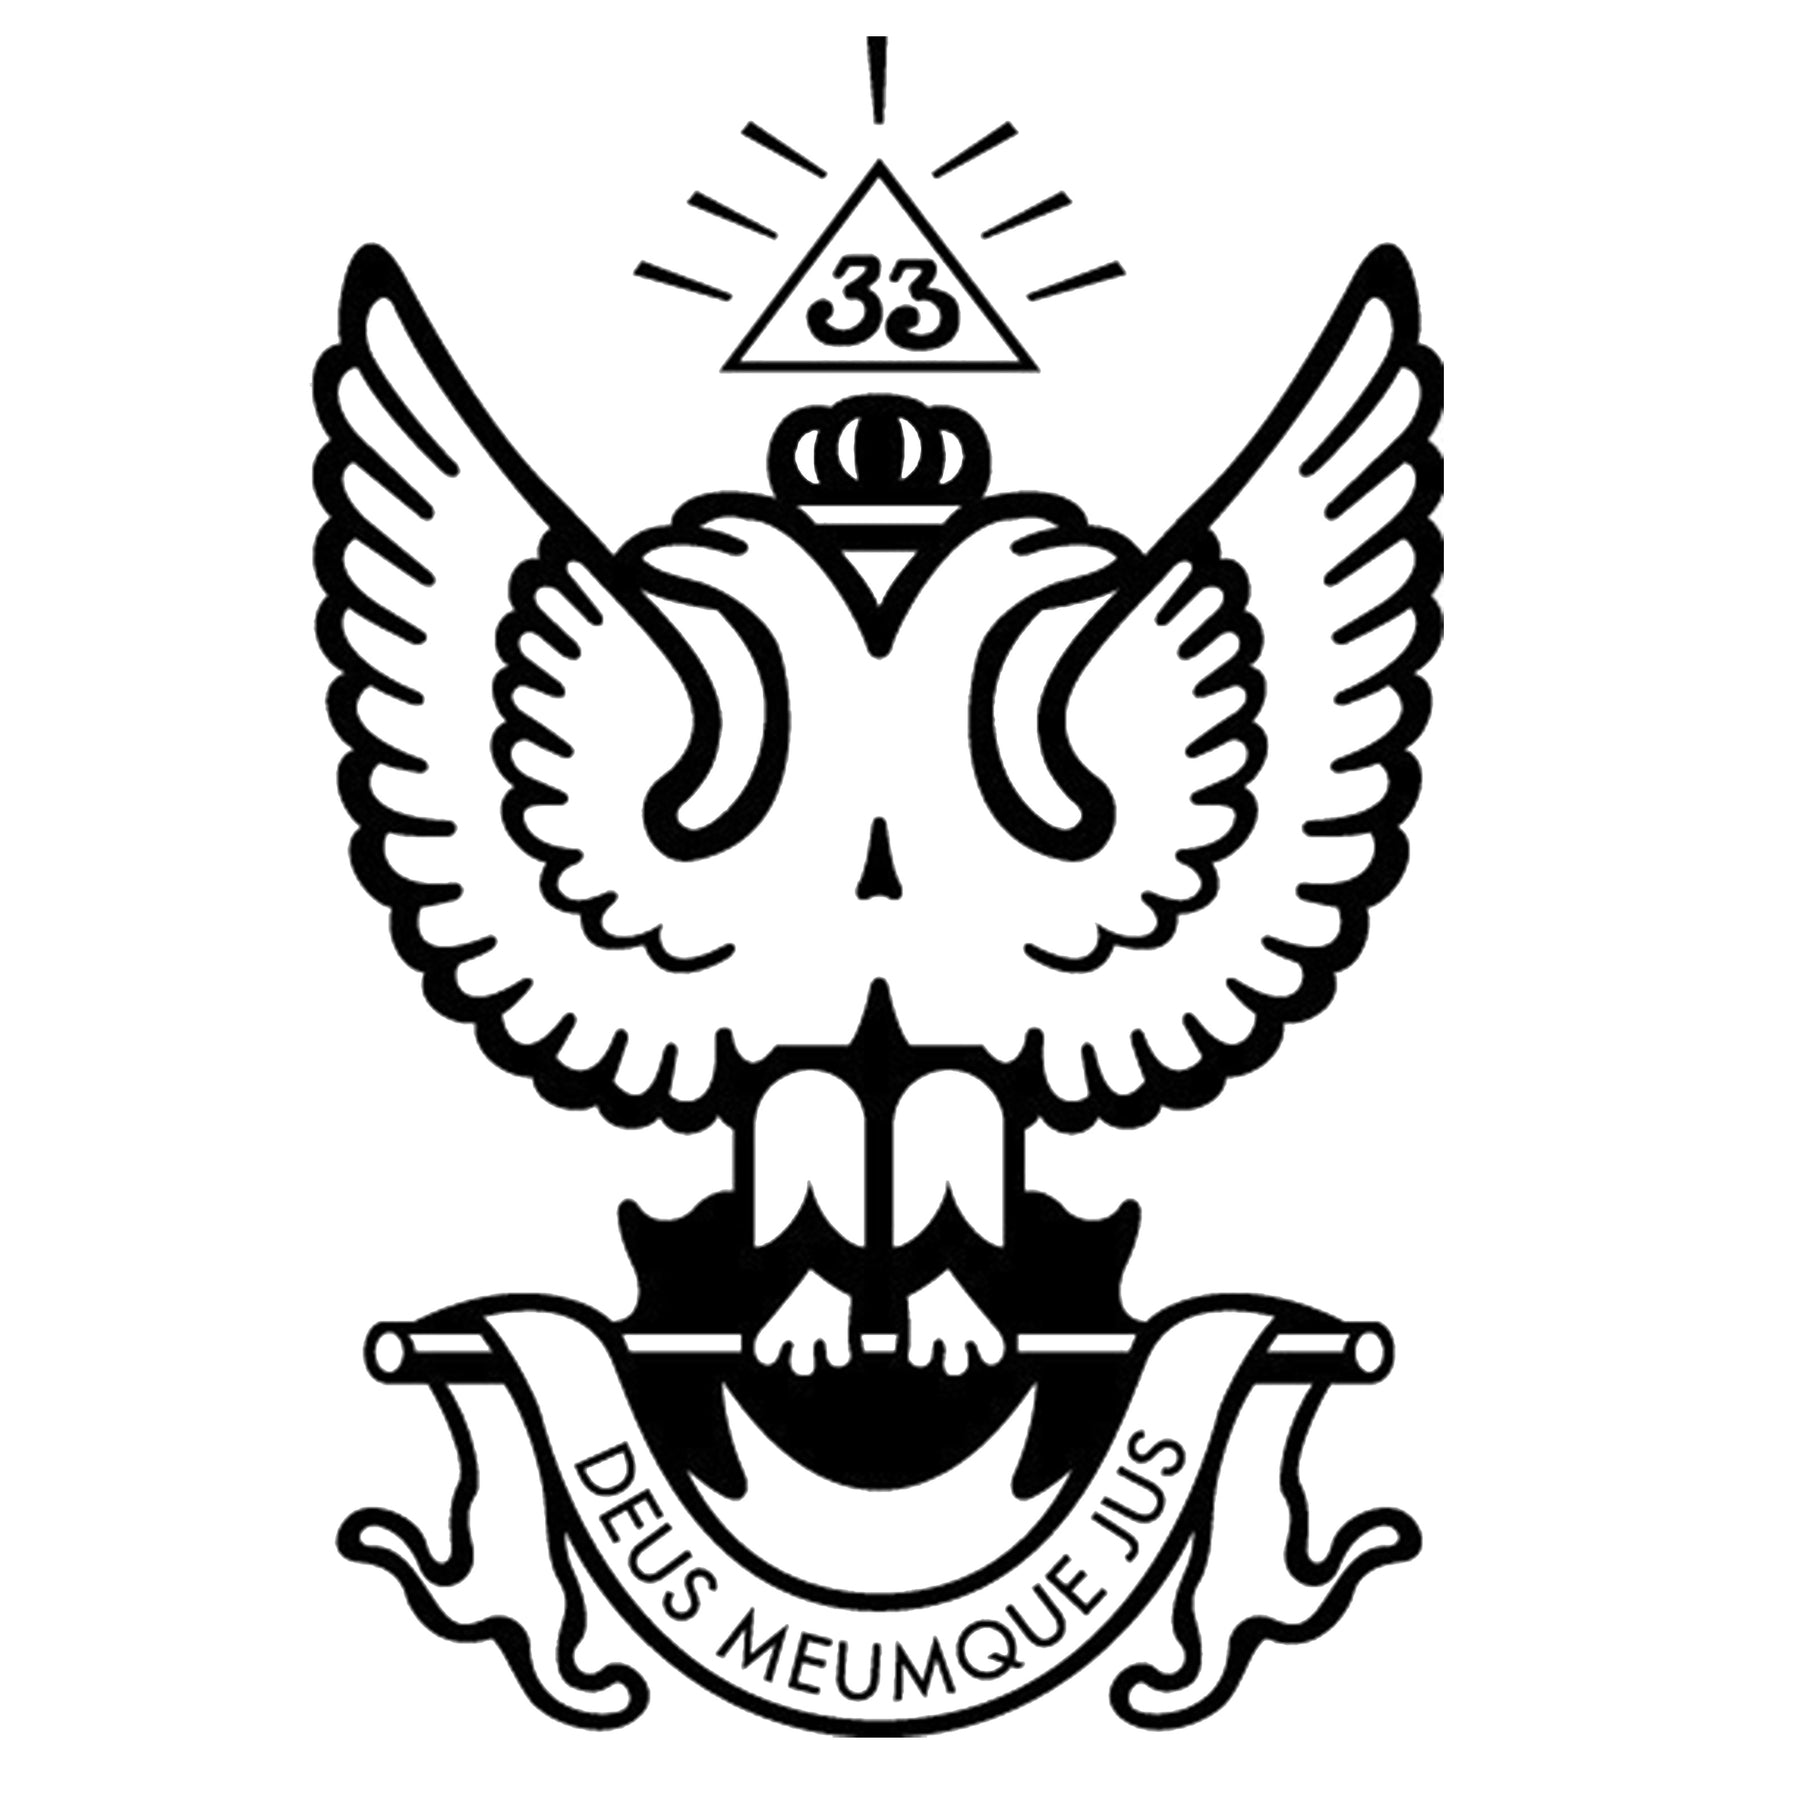 33rd Degree Scottish Rite Journal - Wings Up Leather - Bricks Masons